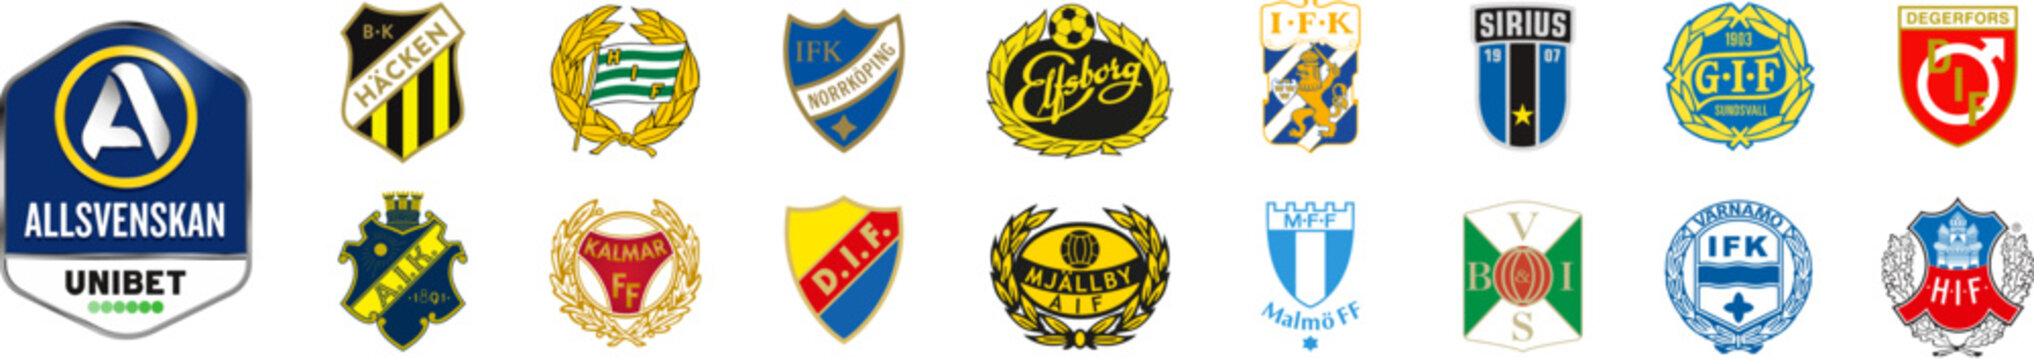 Allsvenskan 2022,Sweden,BK Hacken,AIK Fotboll,Hammarby IF Fotbollforening, Djurgardens IF Fotboll,Malmo FF,Kalmar FF, IF Elfsborg,Mjallby AIF,IFK Norrkoping,IFK Goteborg,IK Sirius,IFK Varnamo.